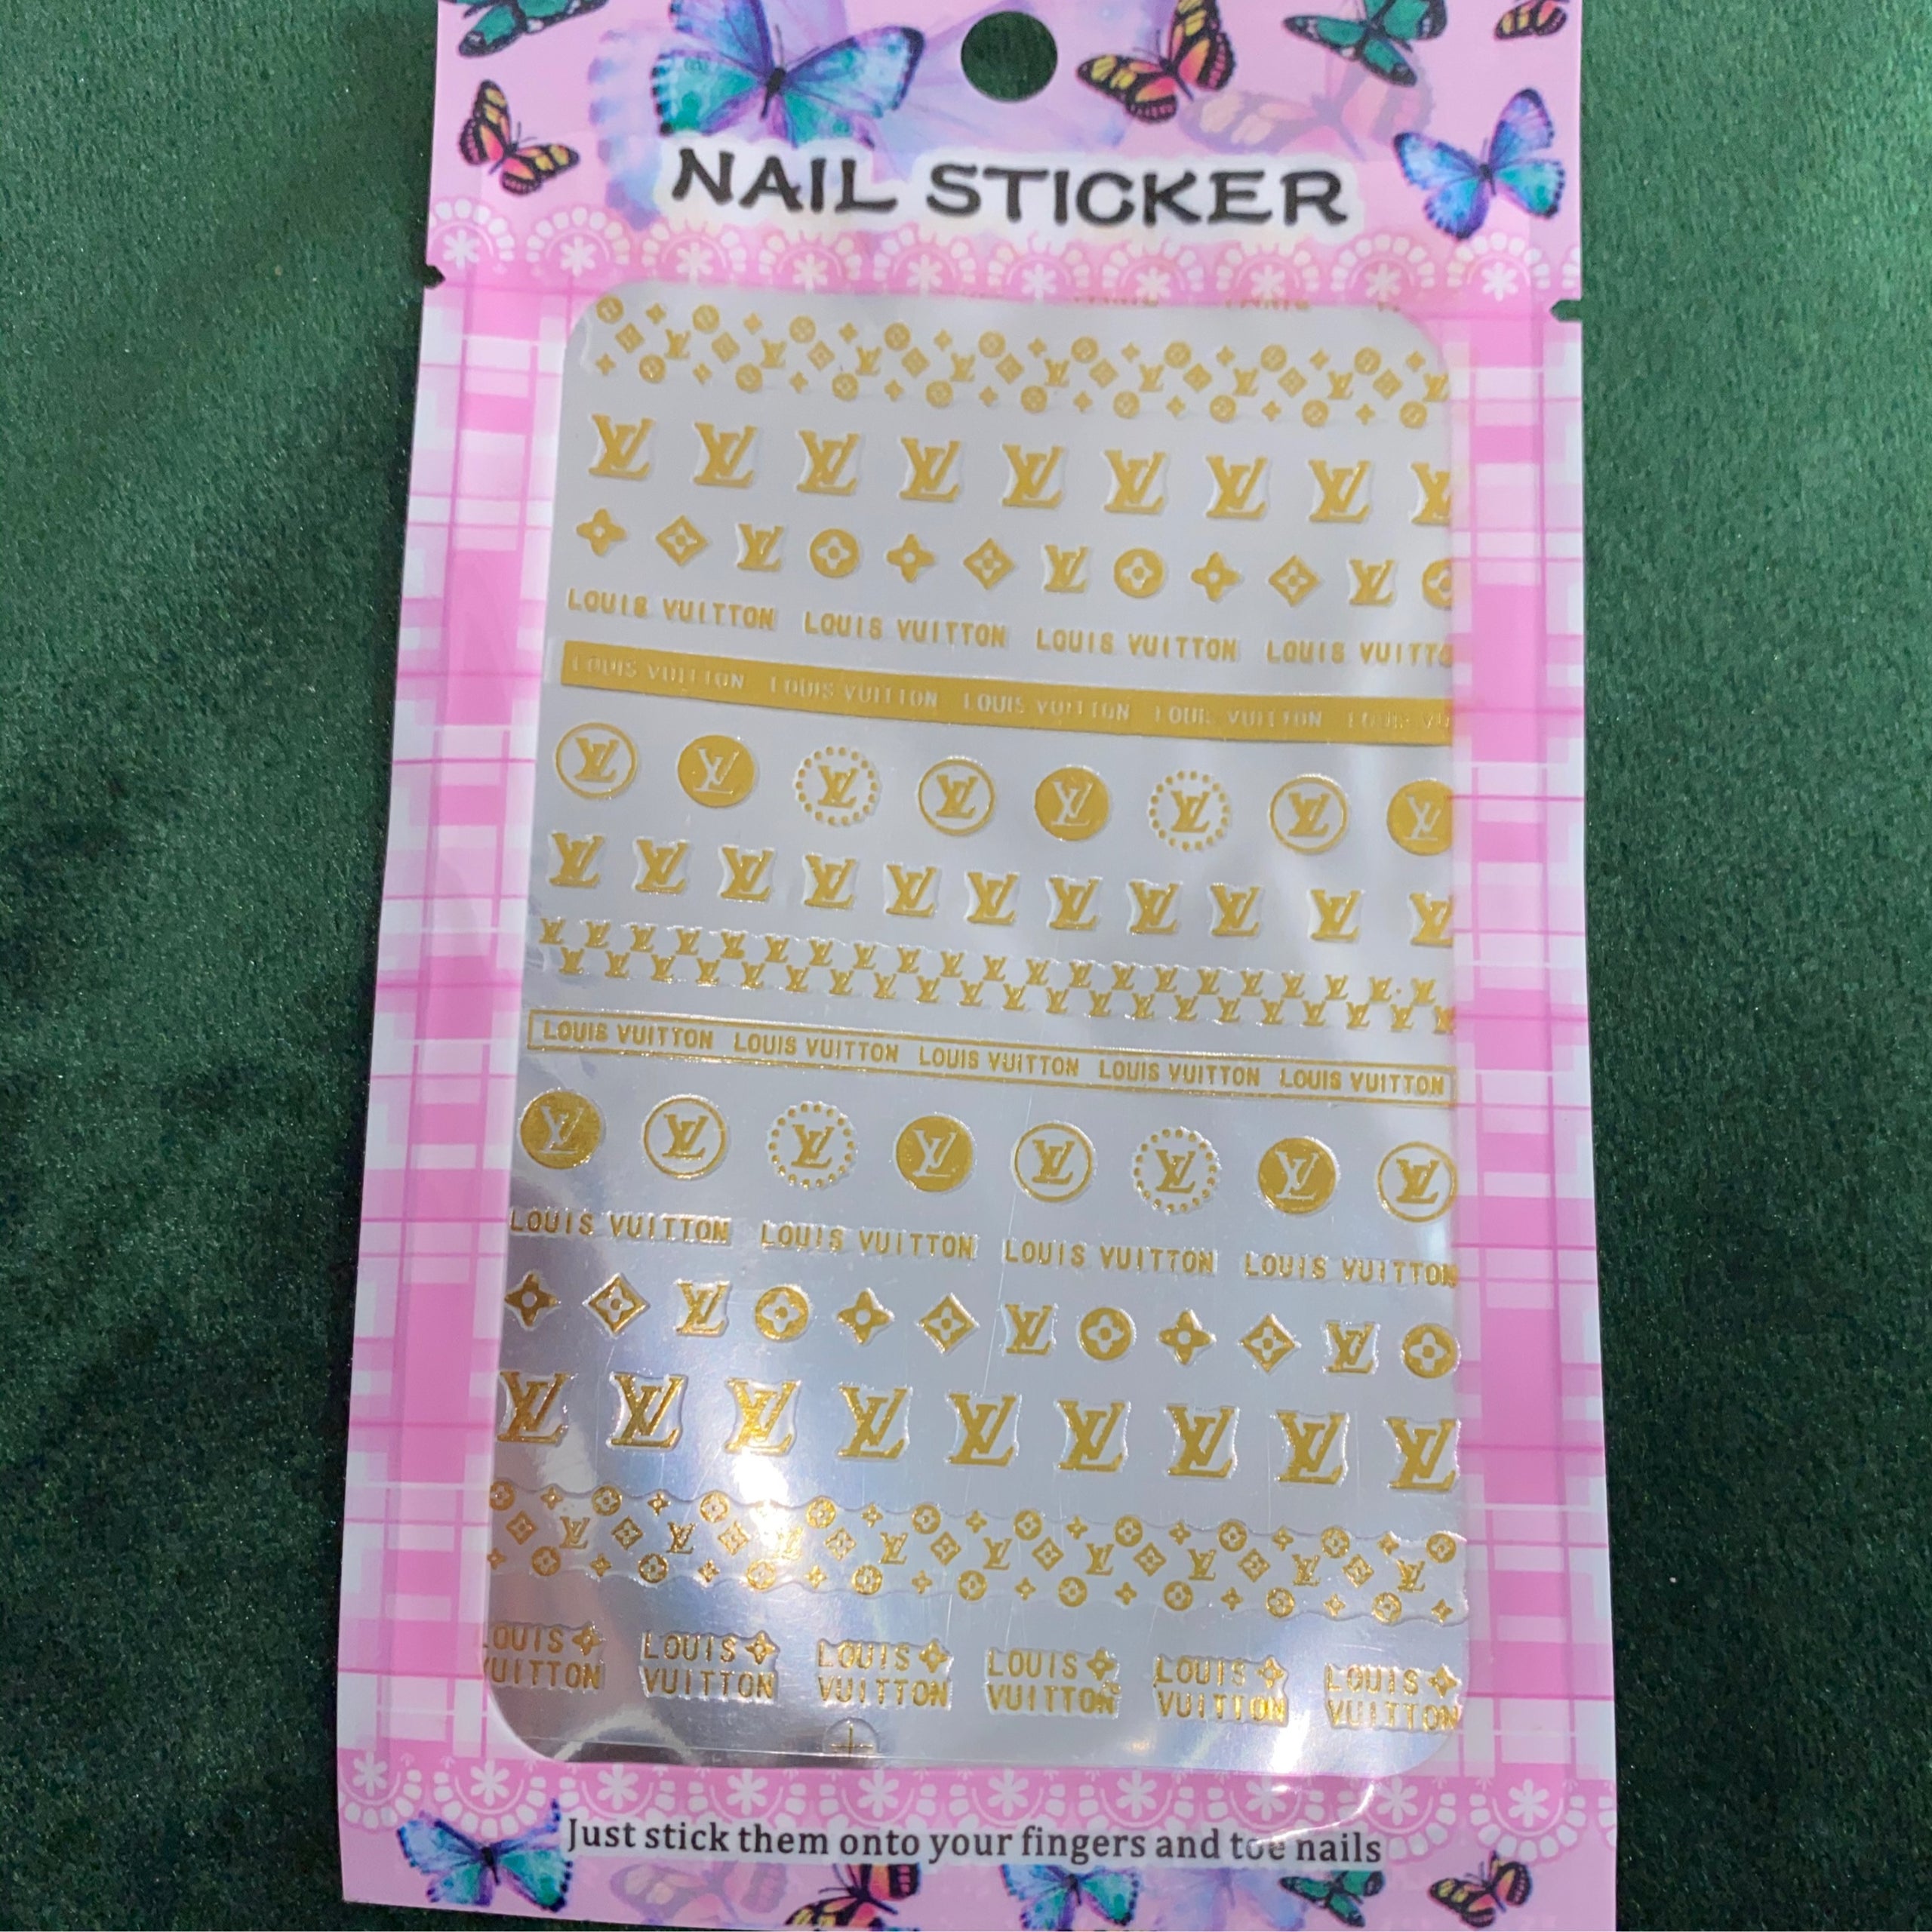 NAIL STICKER Brands Name, Neon Pink DIOR #MG10709-33 - TDI, Inc